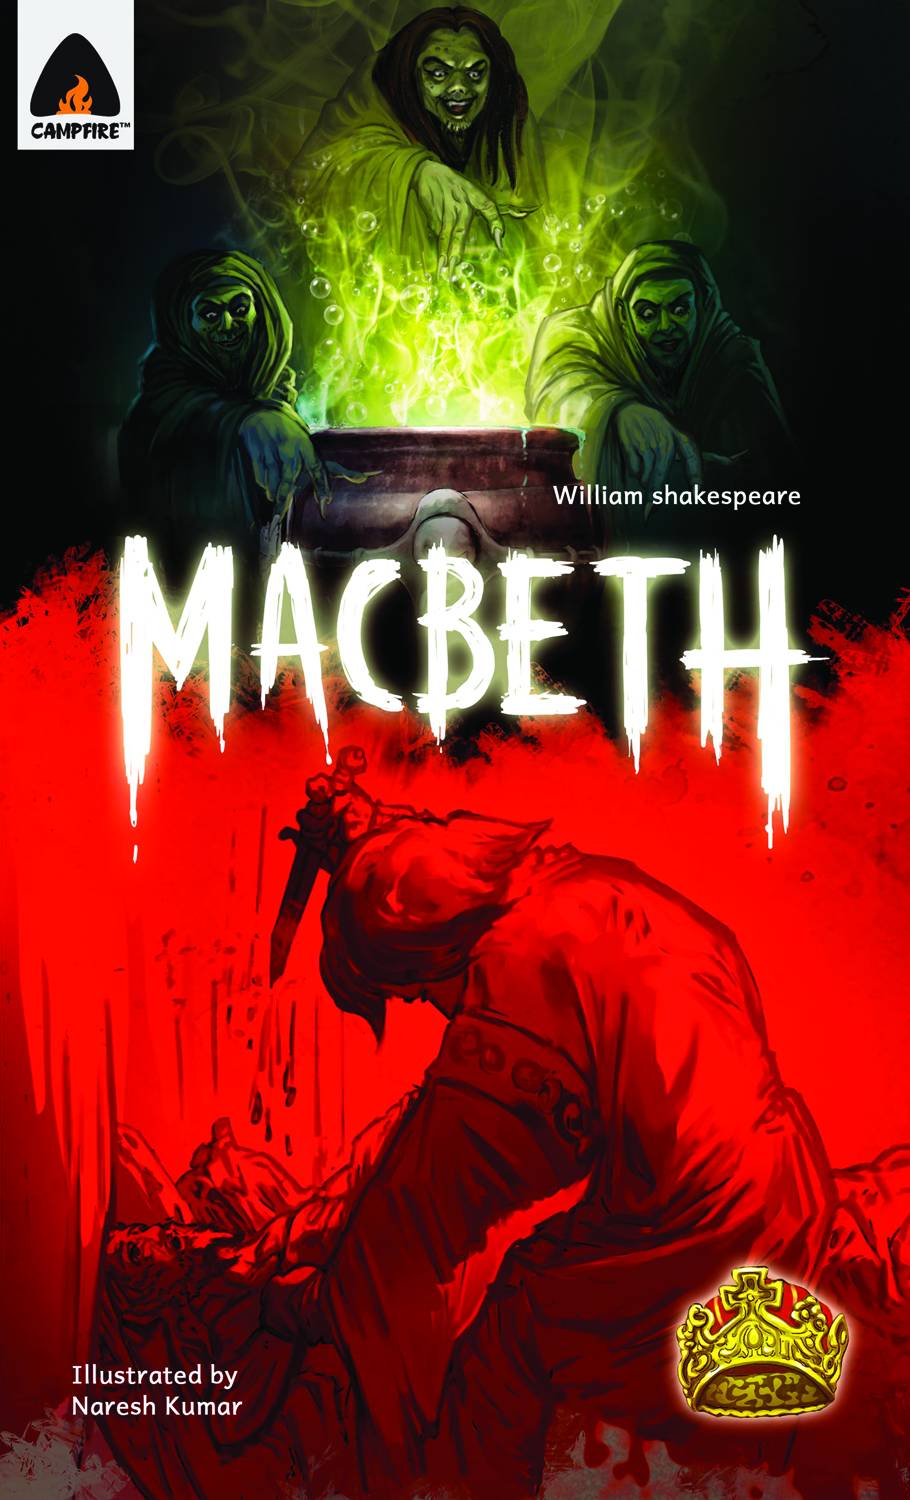 Macbeth Campfire Graphic Novel